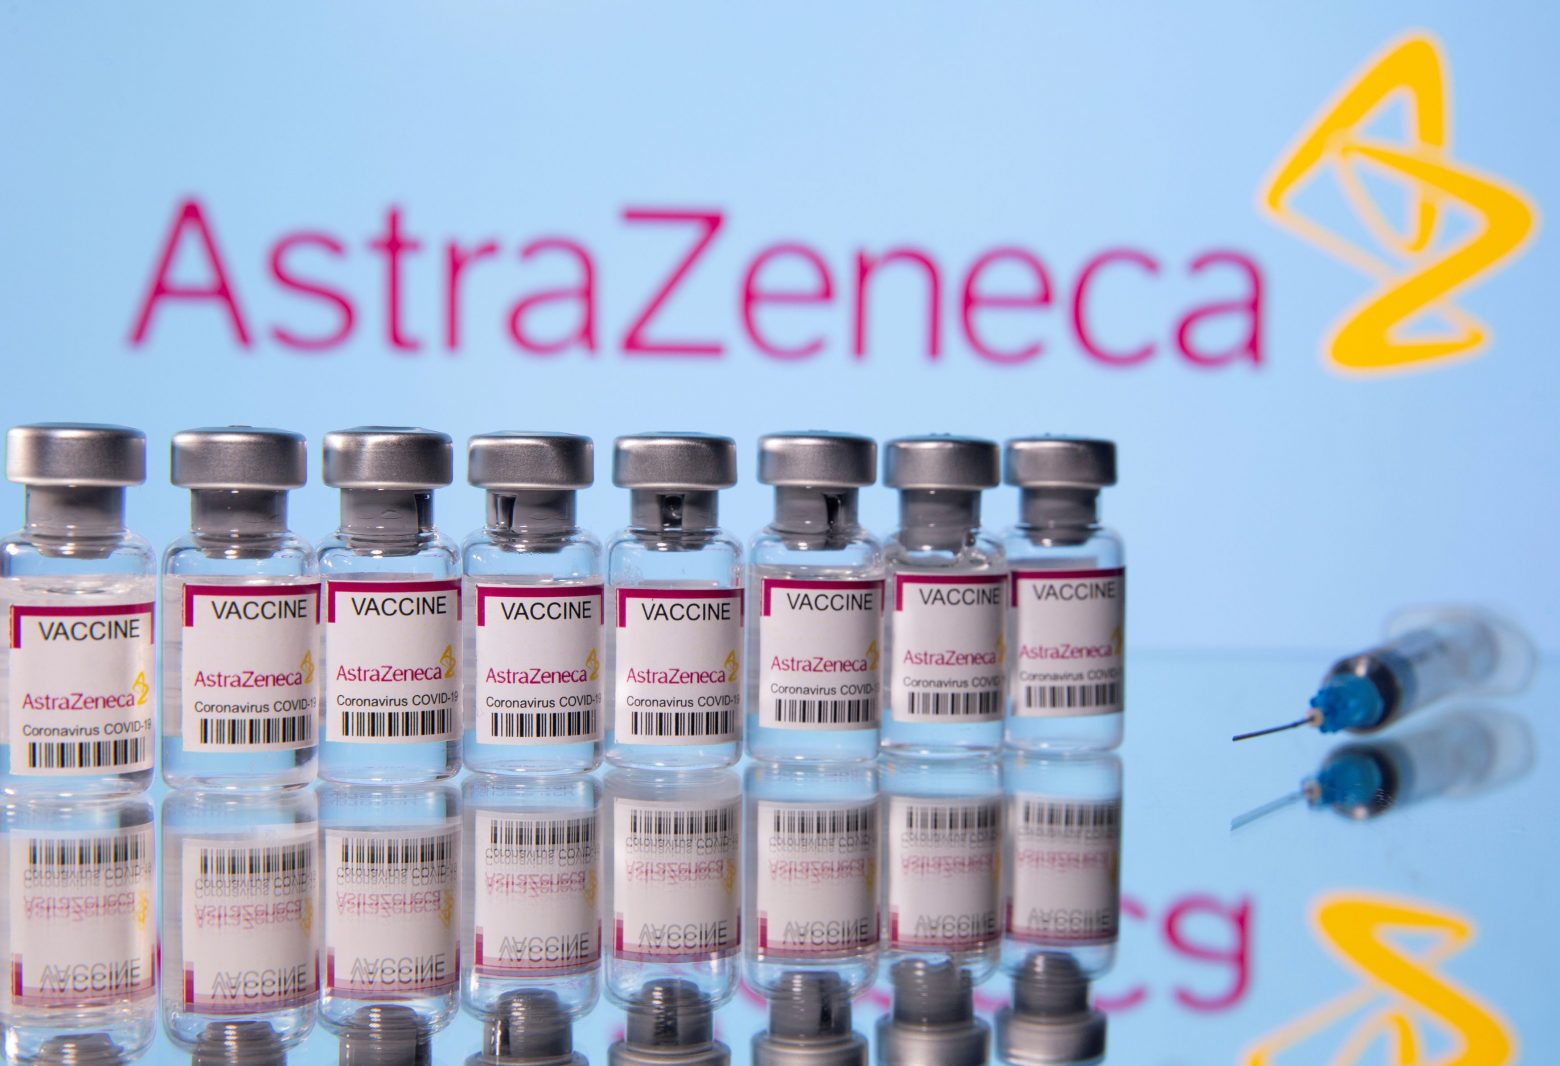 FT - Οξφόρδη και AstraZeneca μελετούν την παρασκευή νέου εμβολίου κατά της Ομικρον